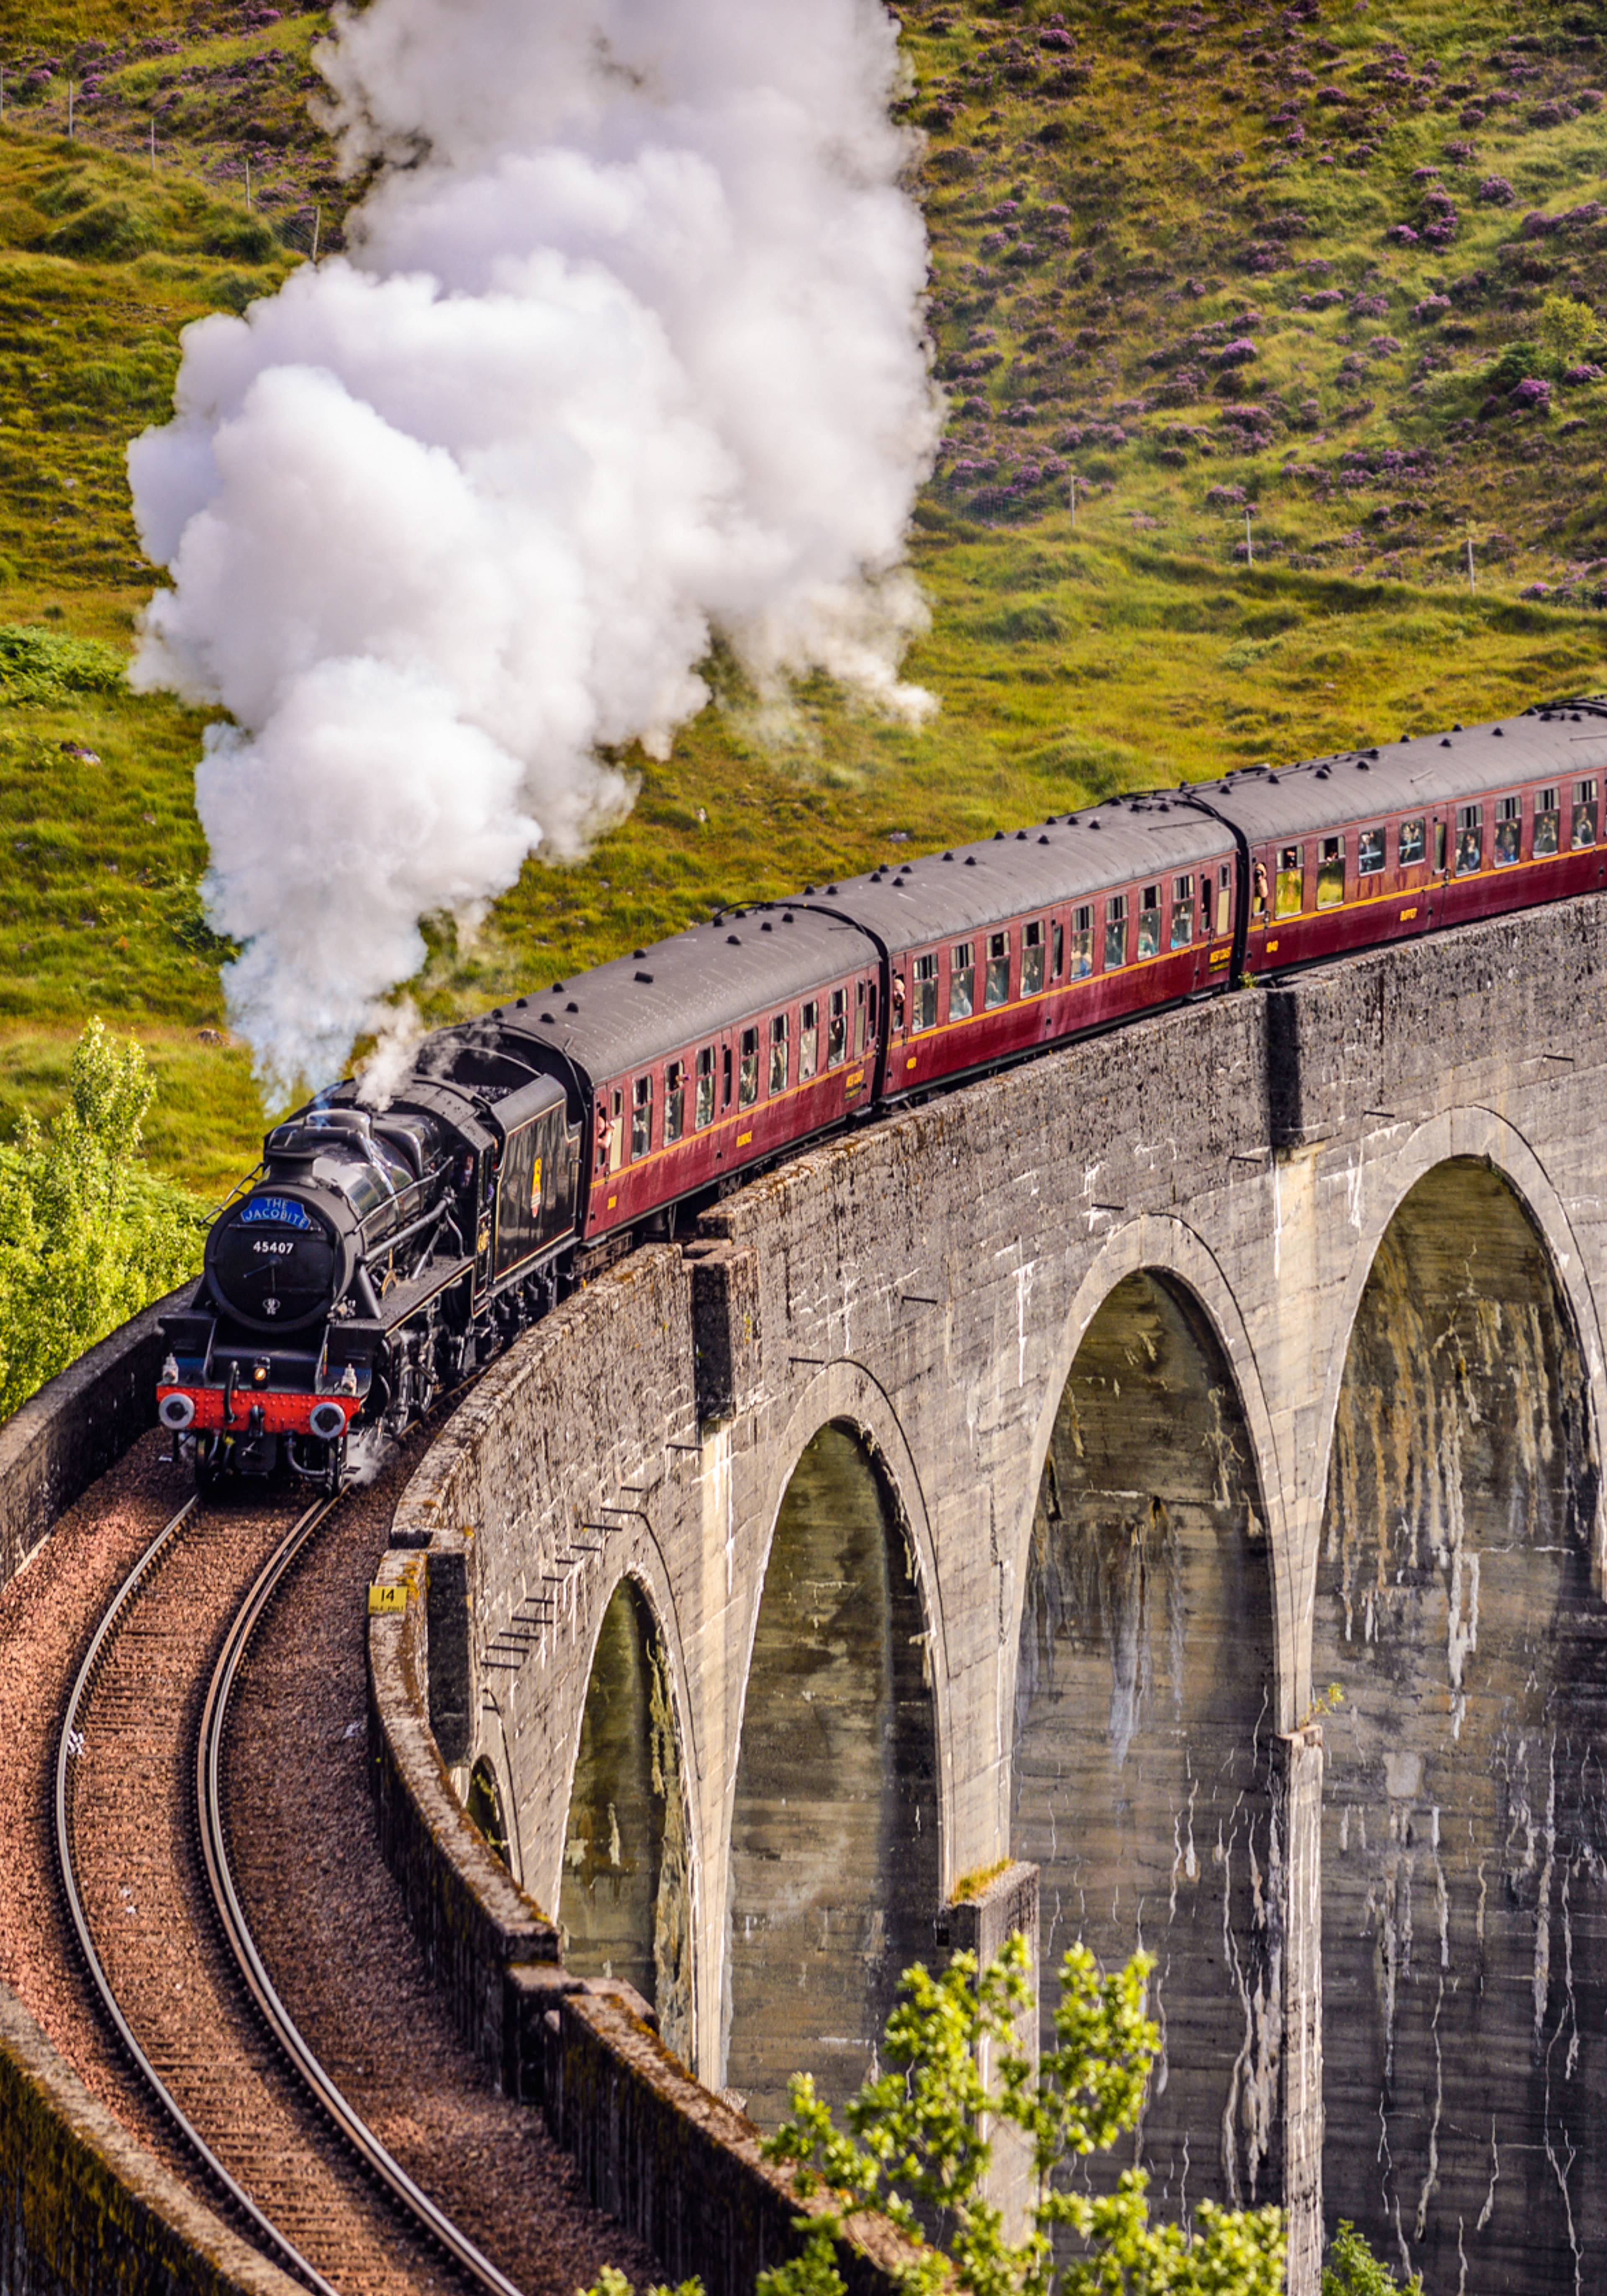 treno hogwarts express sul viadotto glenfinnan